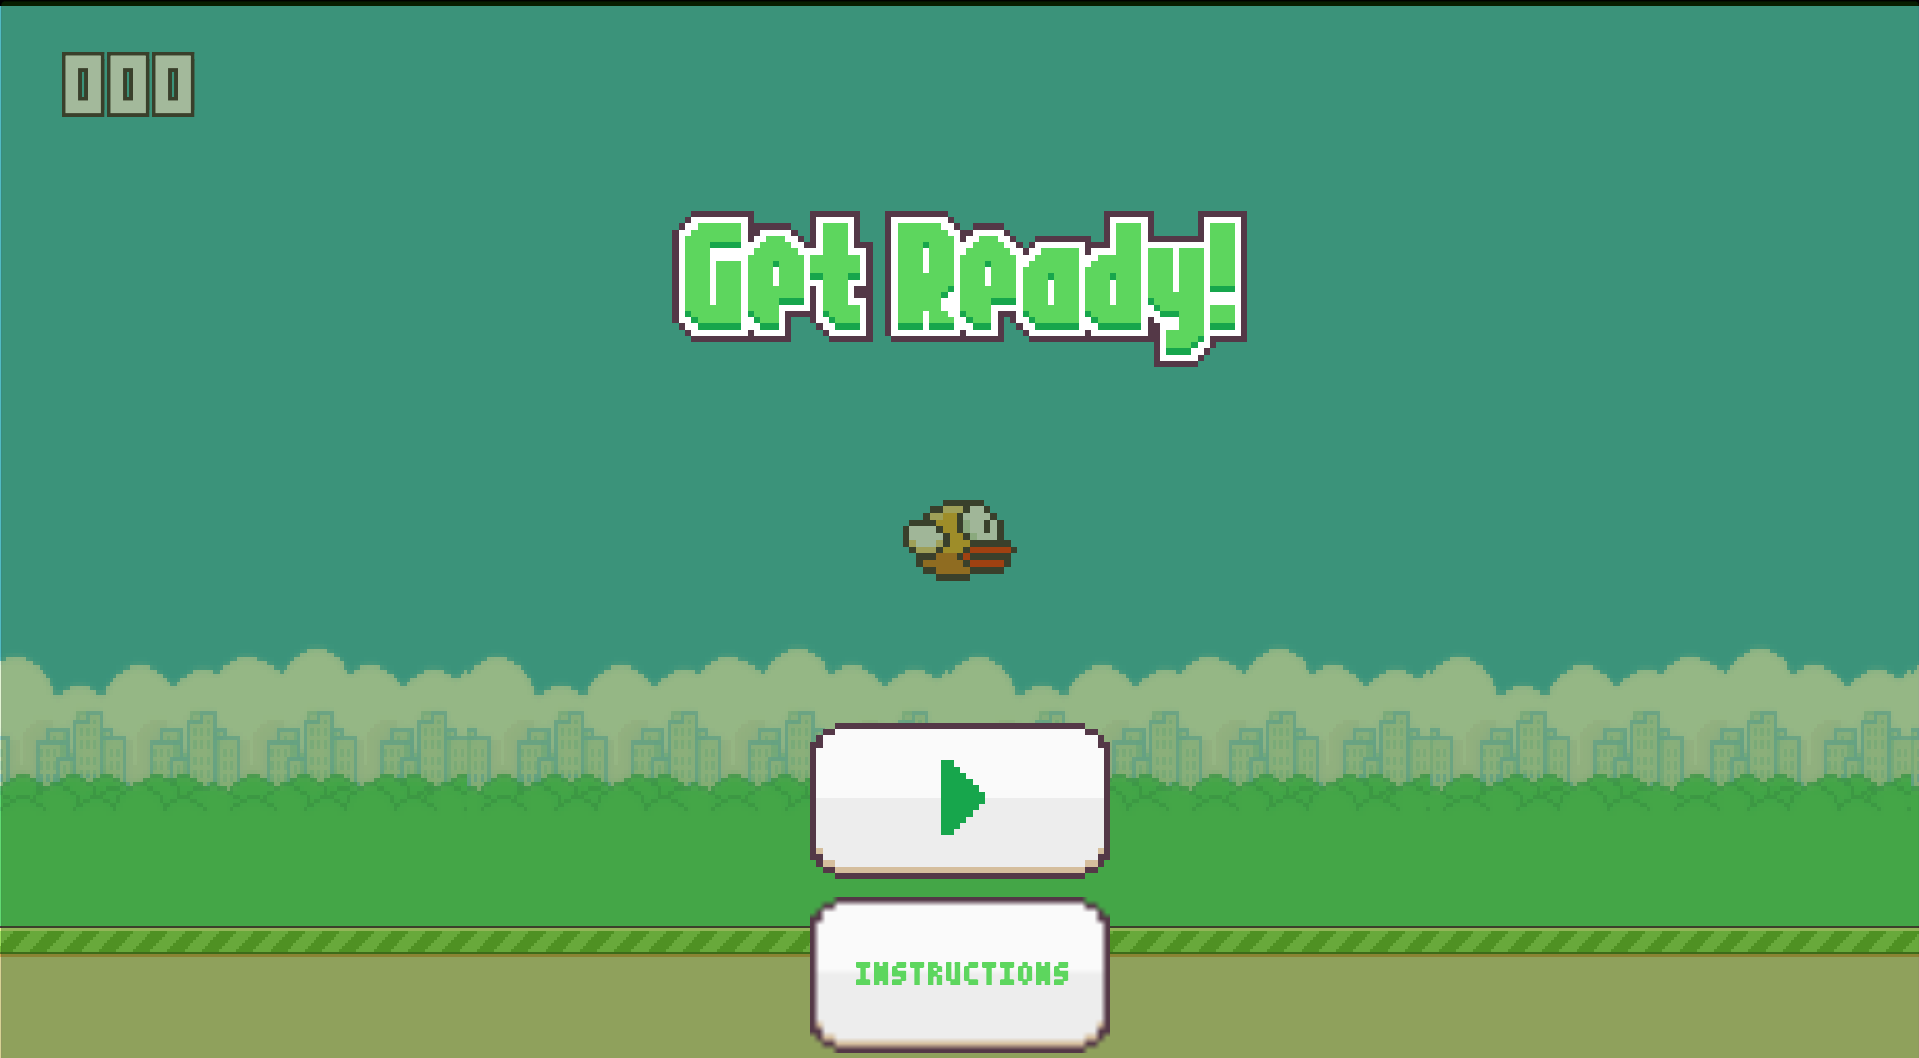 Projeto: Clone Flappy bird